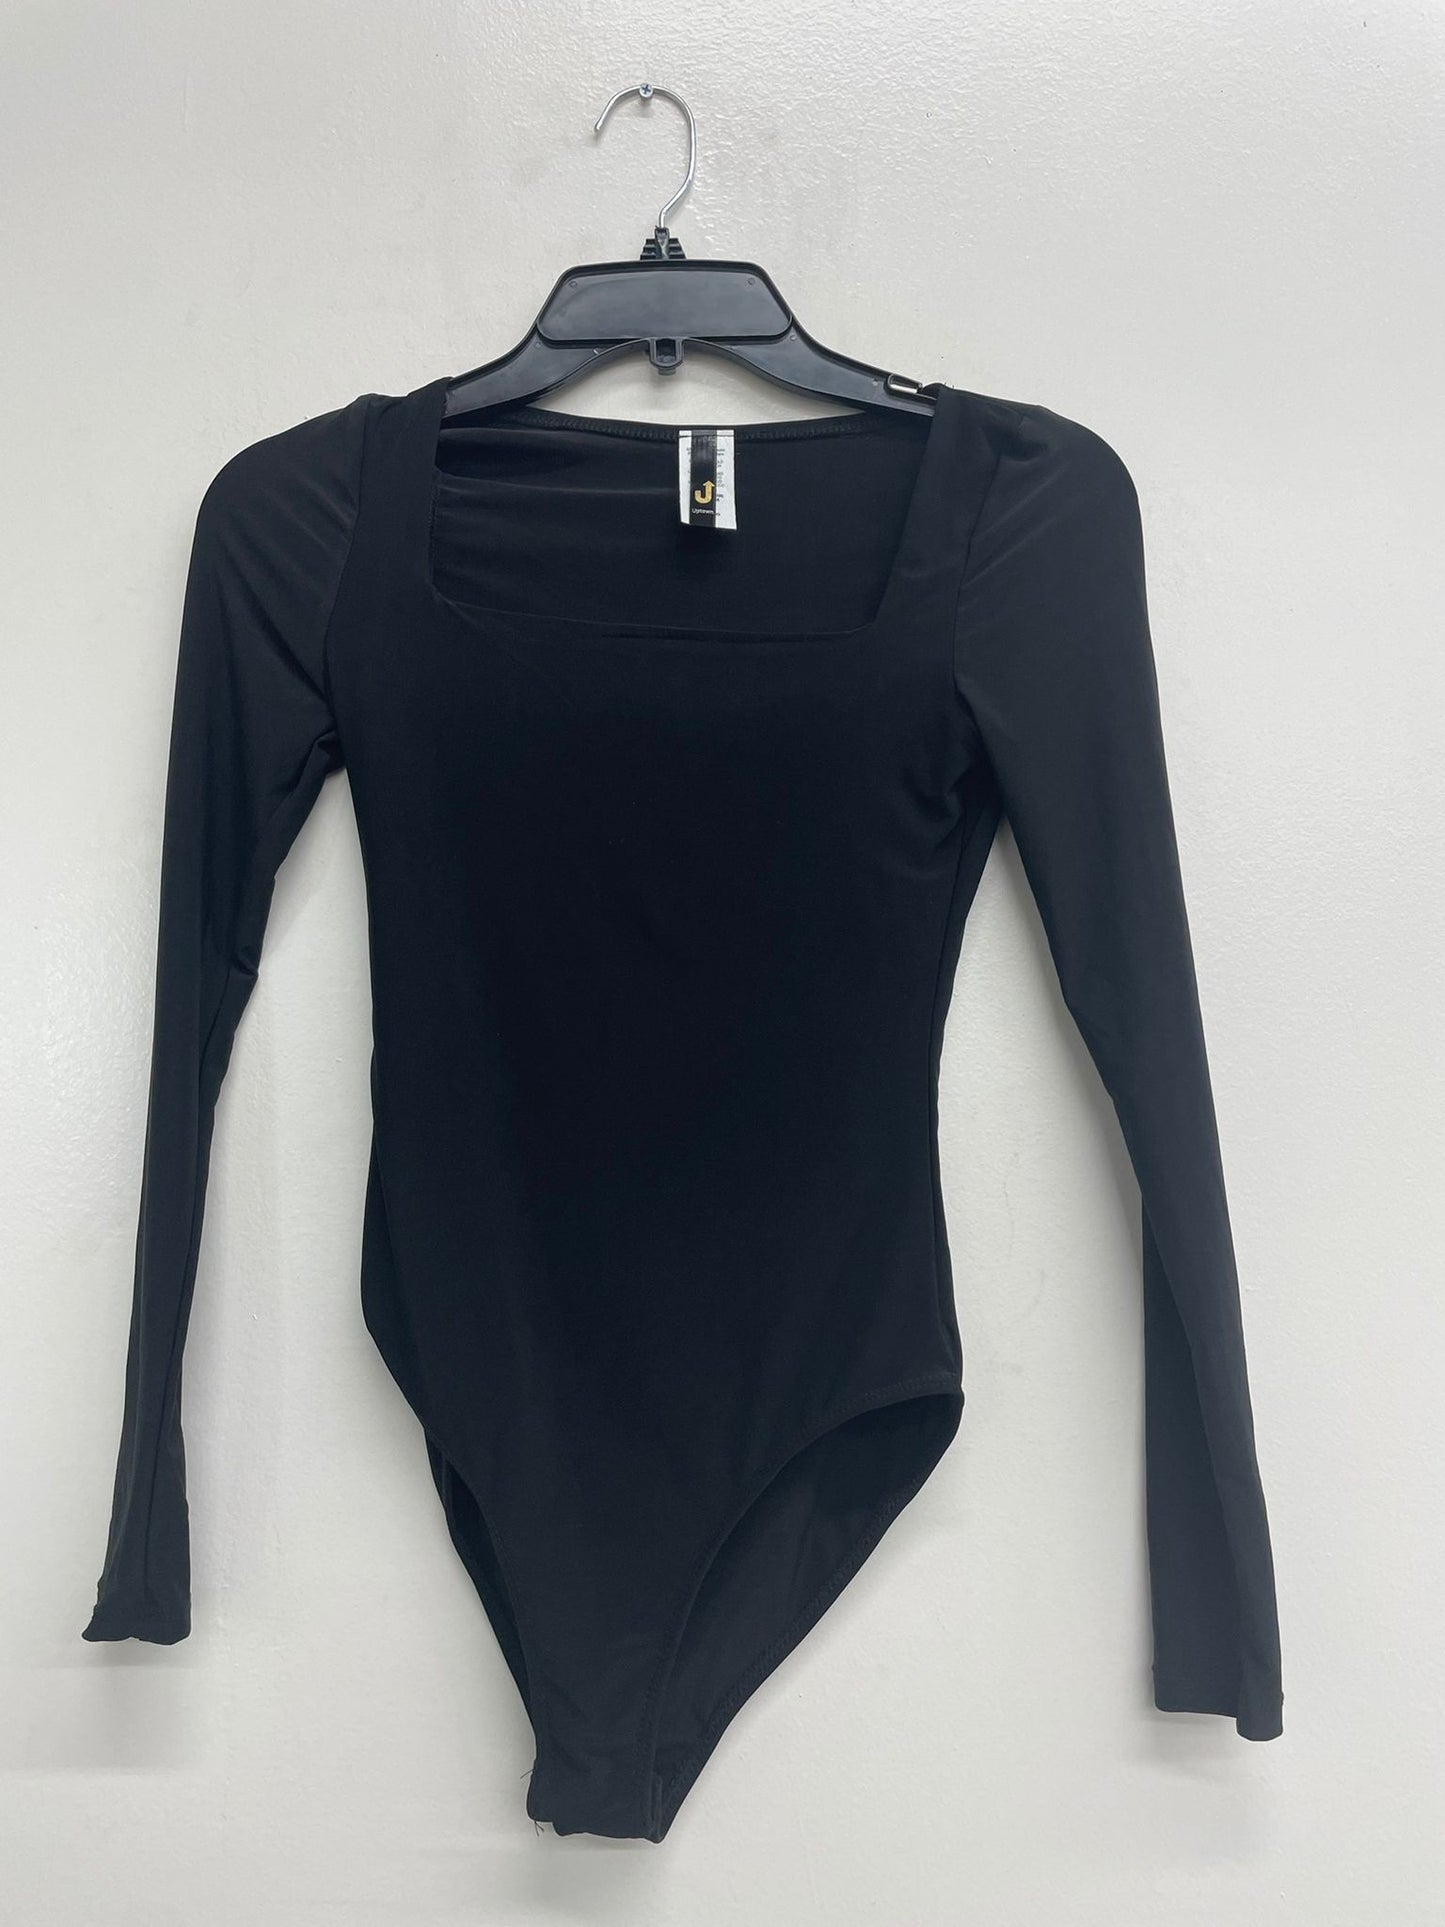 Main Squeeze Bodysuit-Black